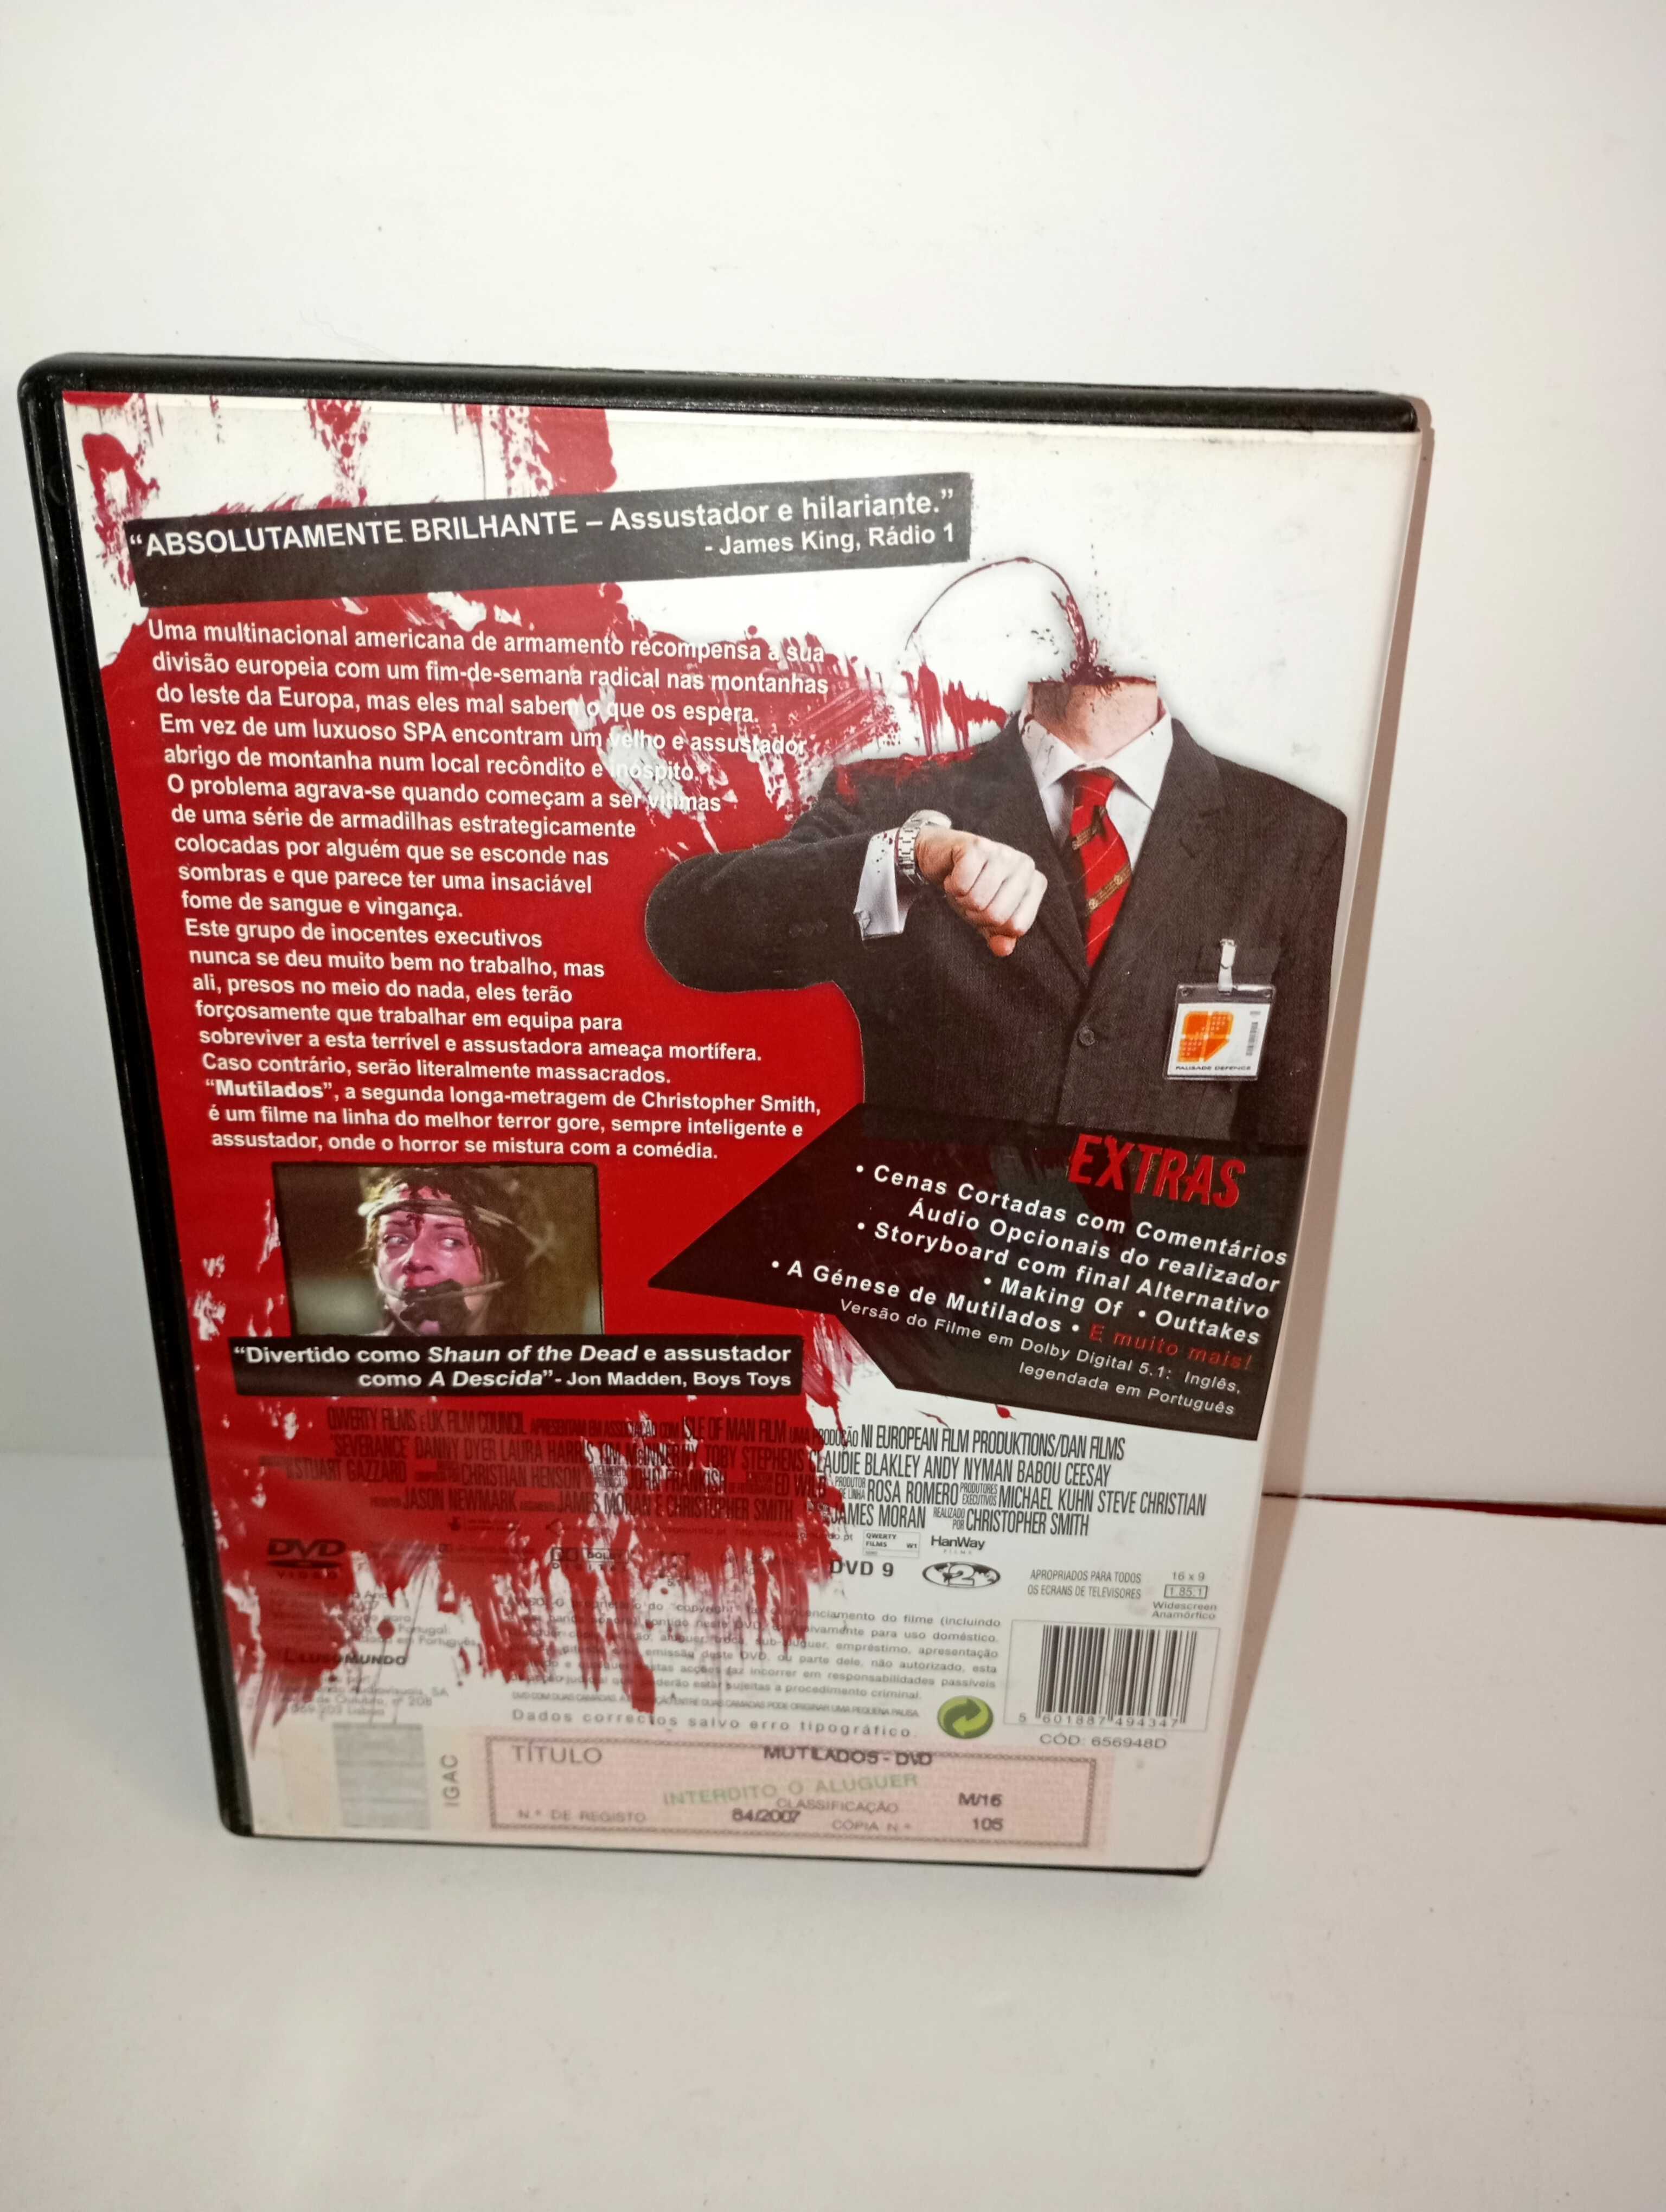 Mutilados - DVD Original